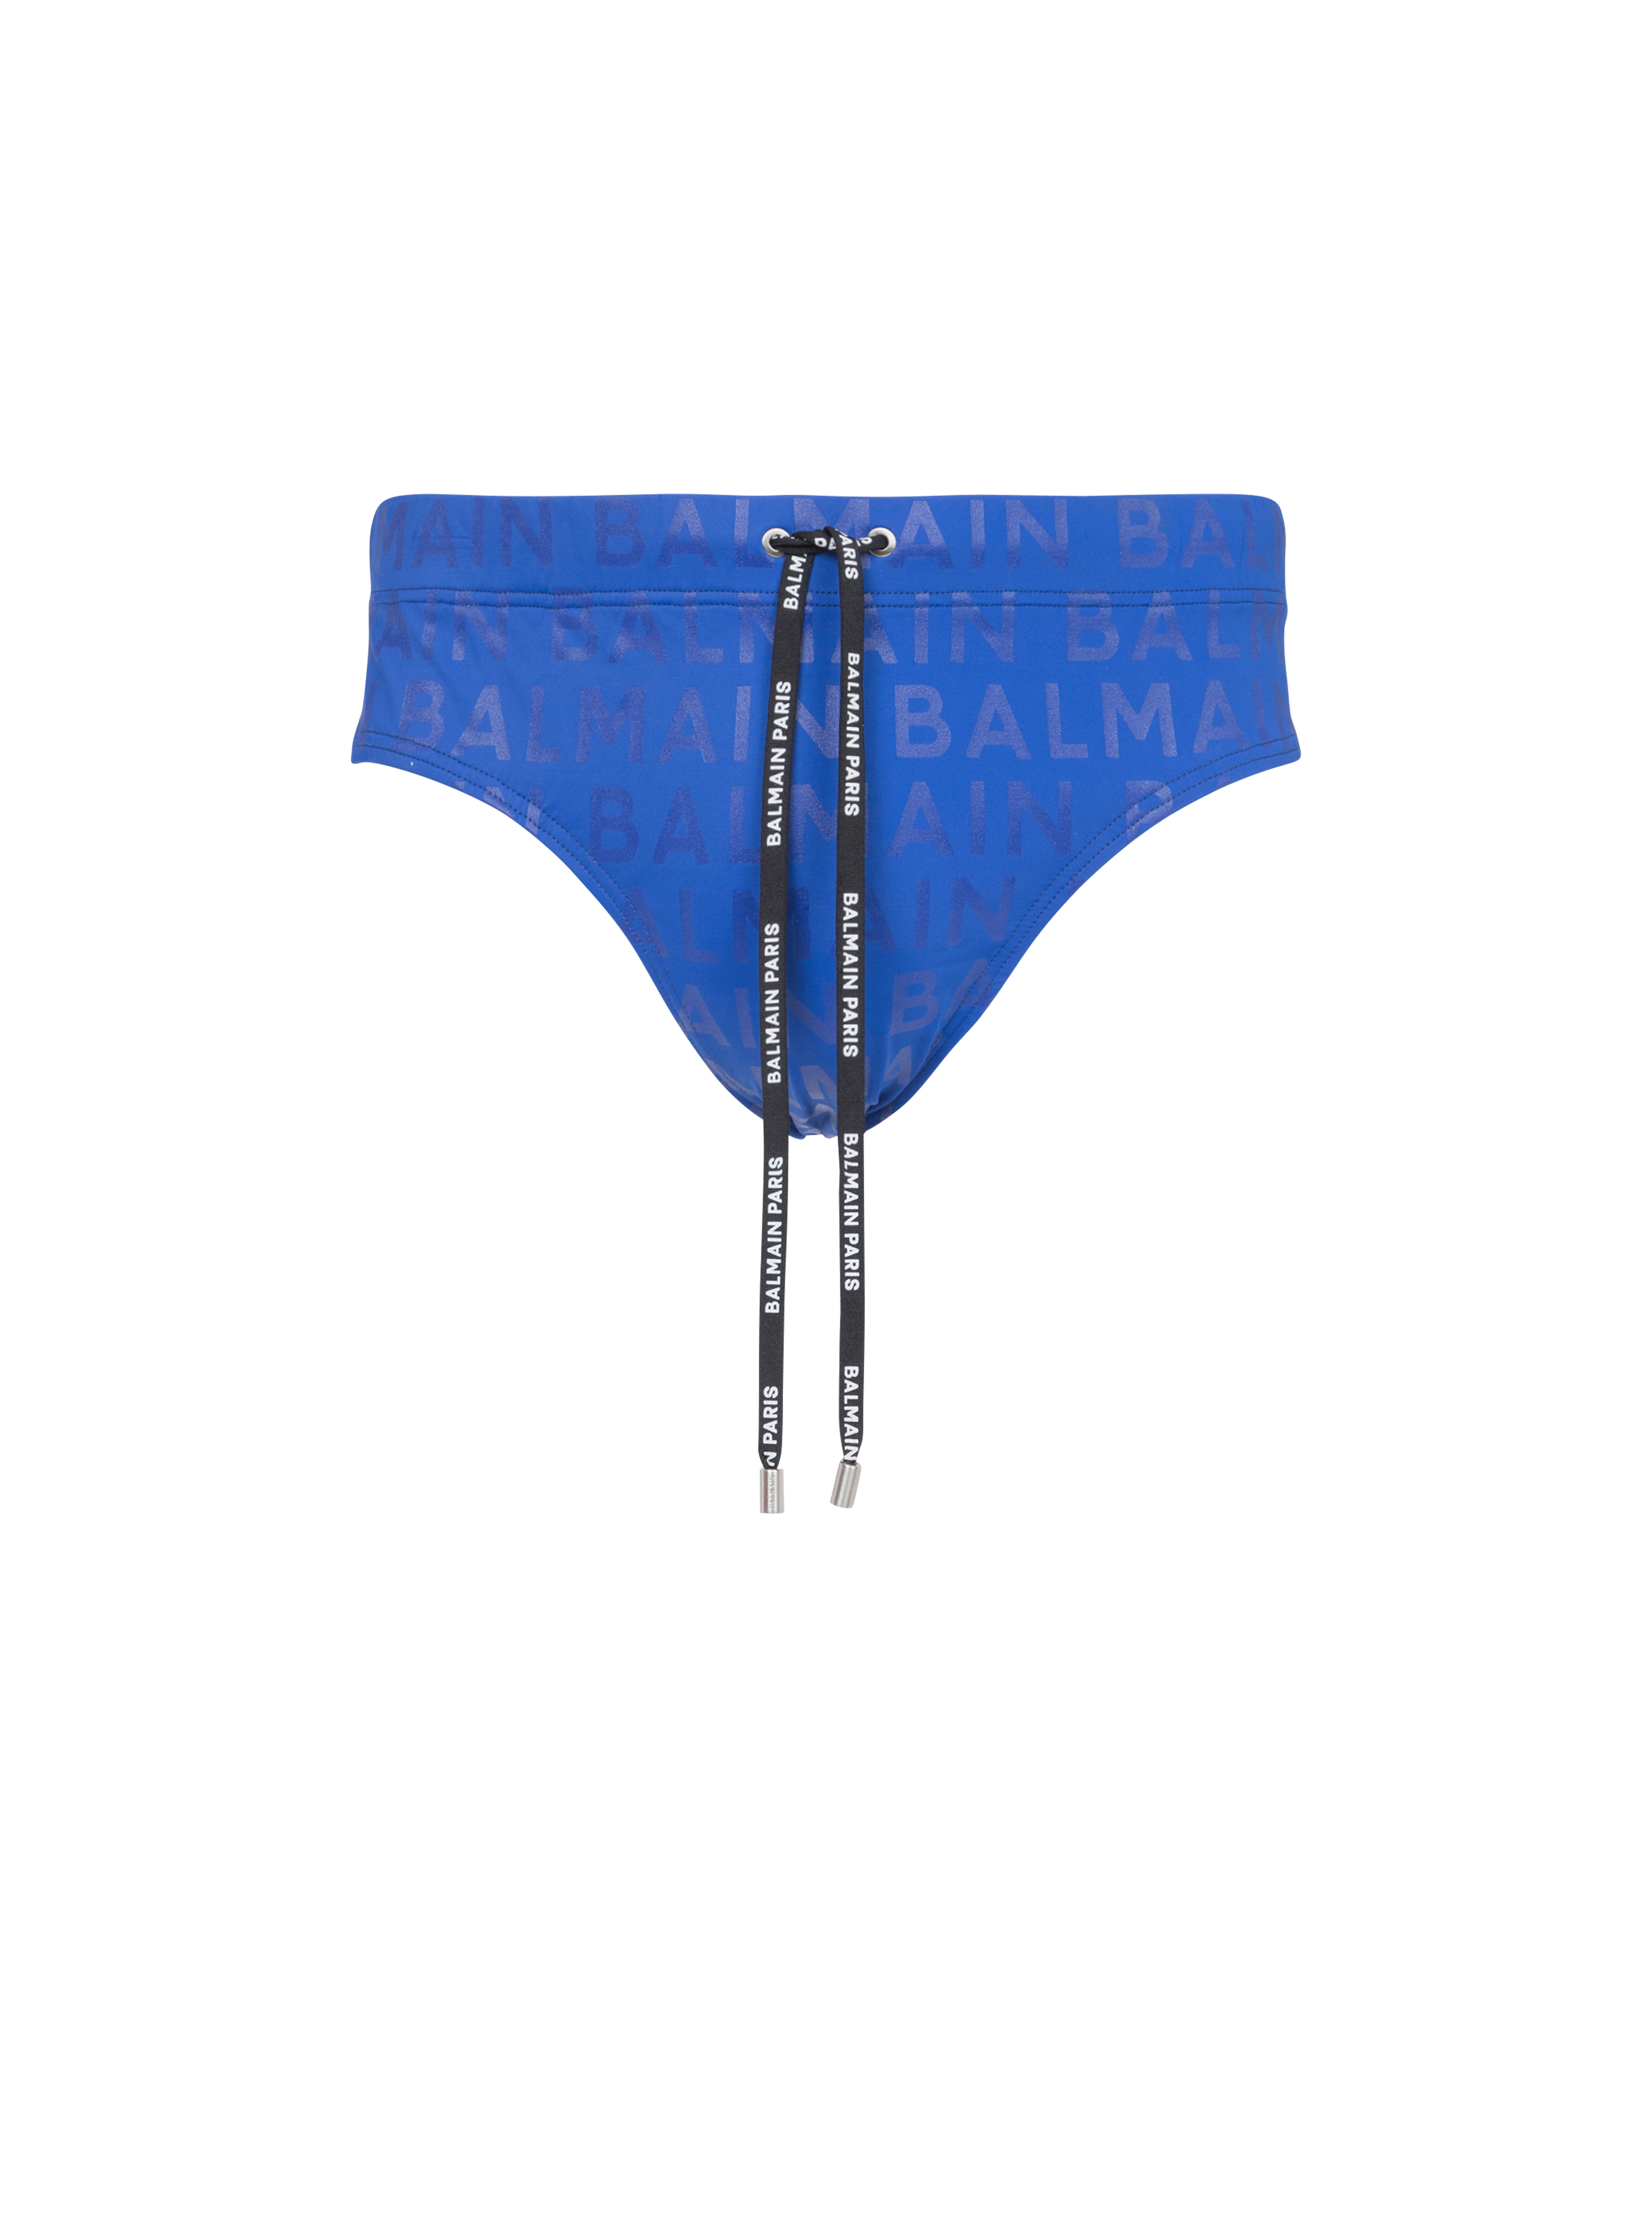 Balmain巴尔曼标志三角泳裤, blue